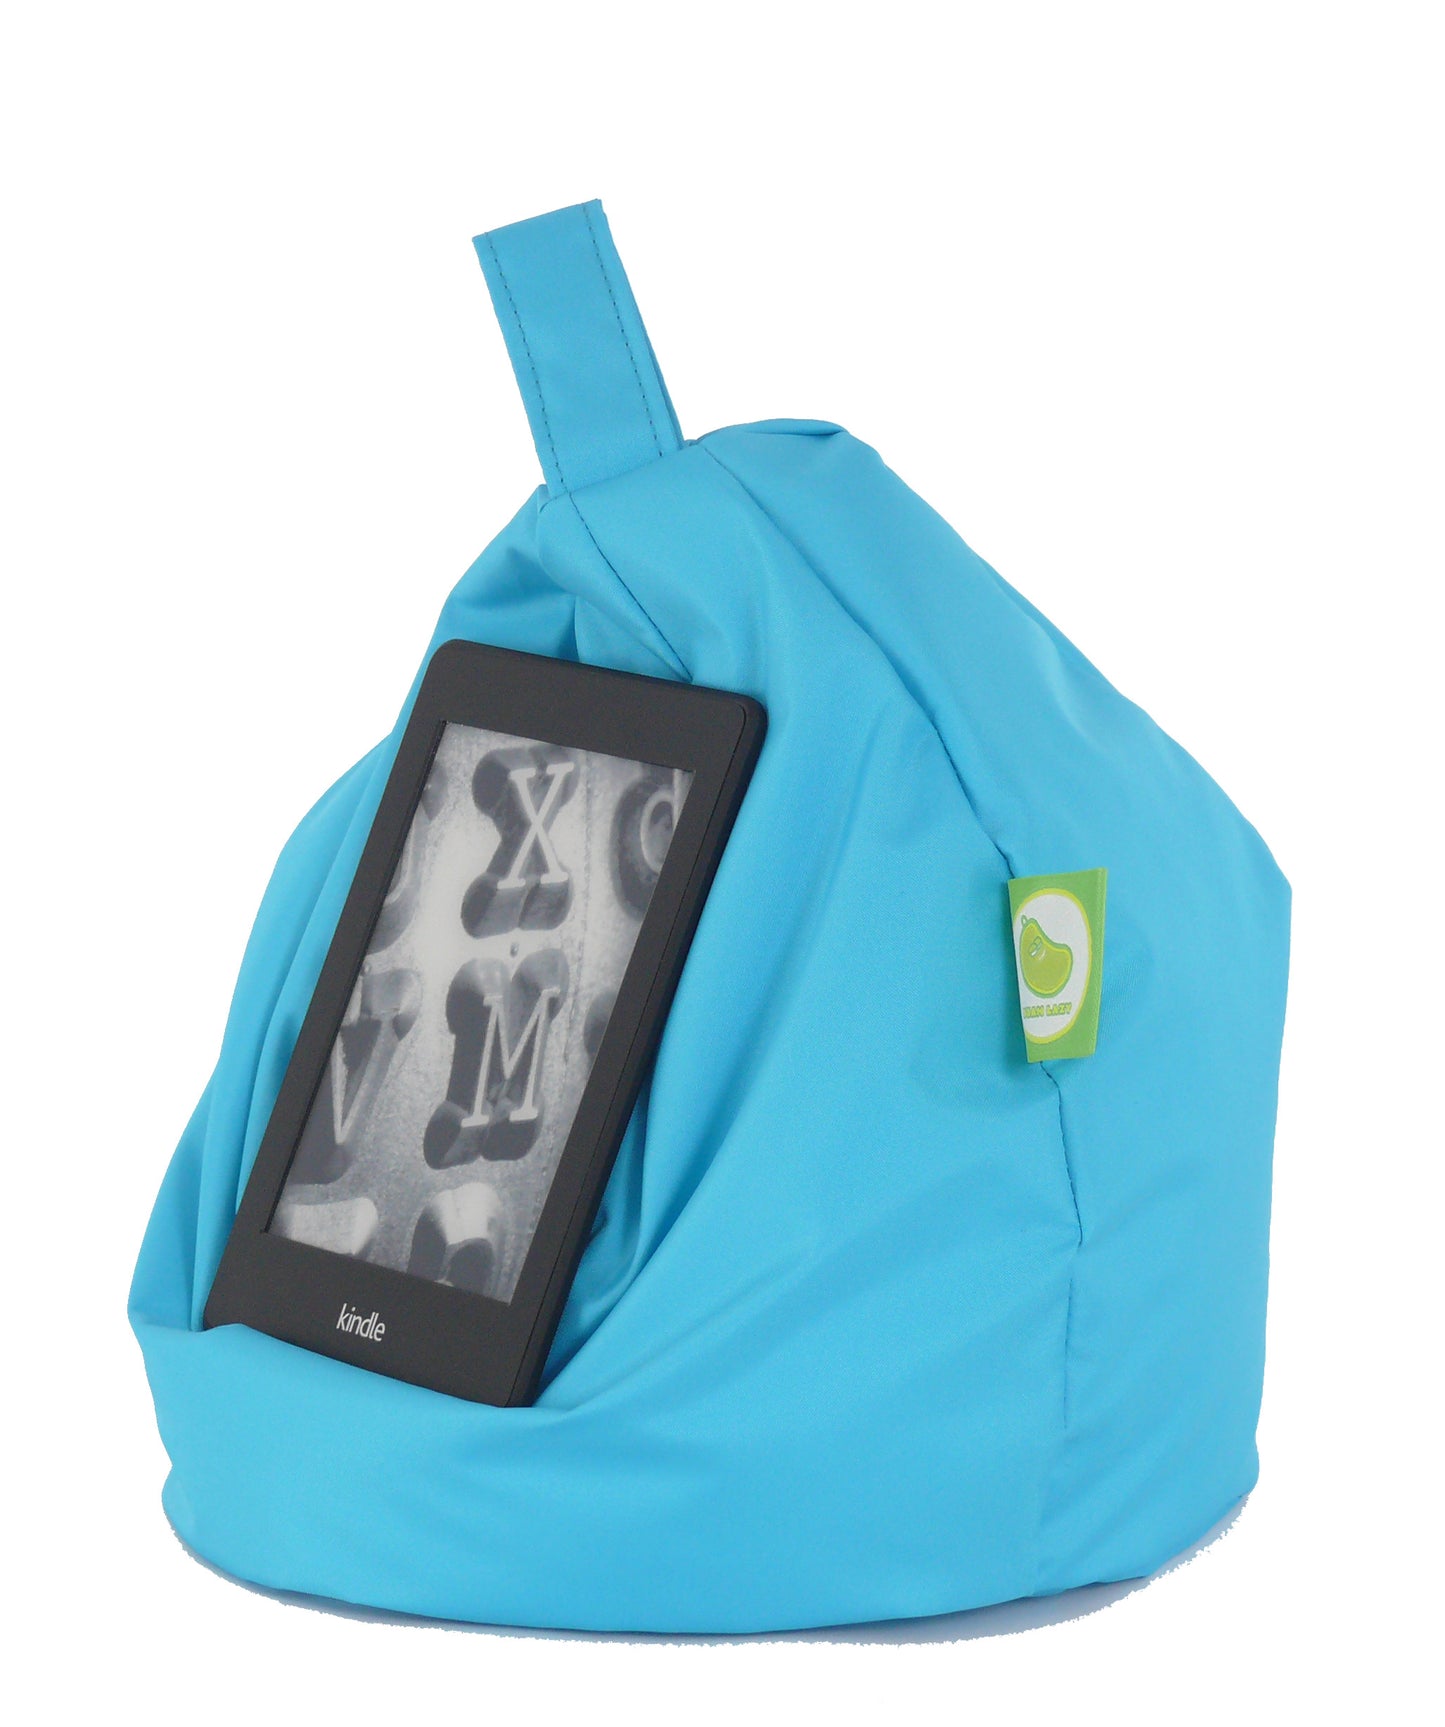 Waterproof Aqua iPad, eReader & Book Mini Bean Bag